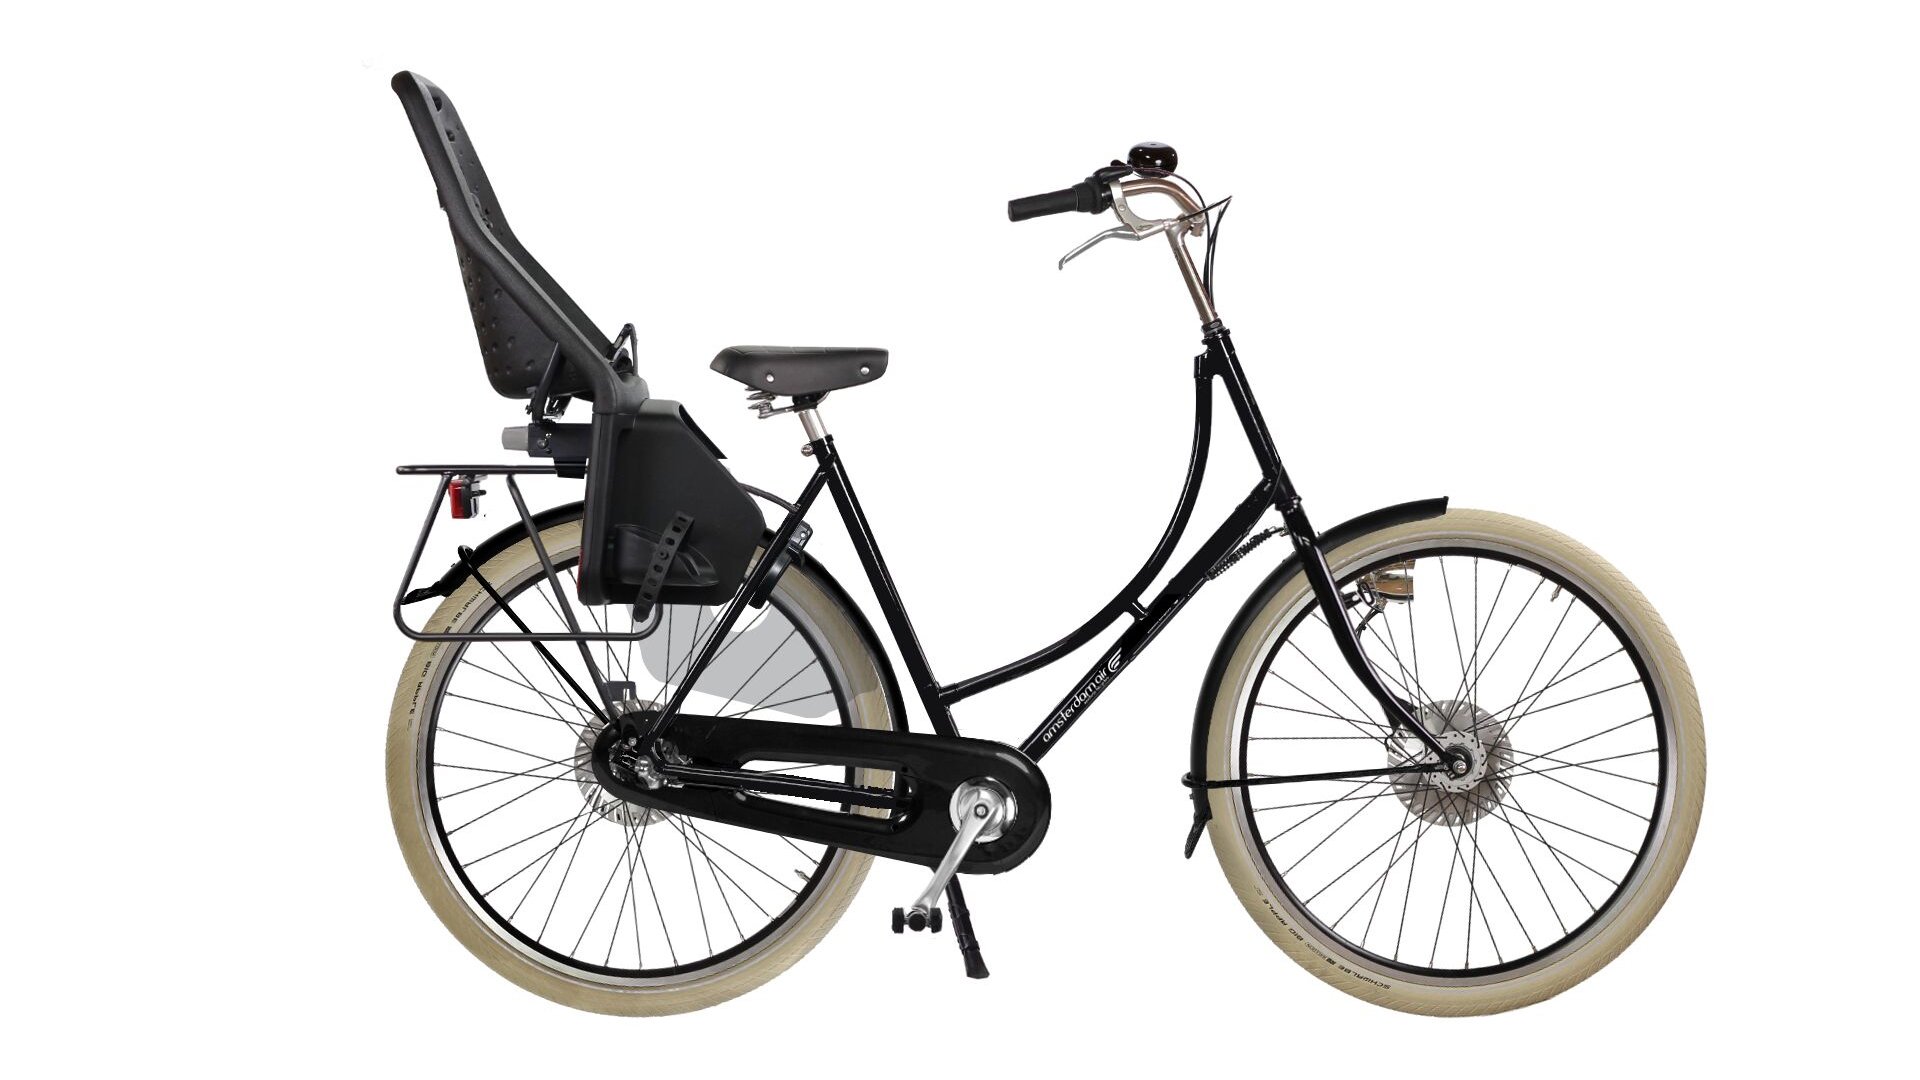 Siège enfant Yepp Maxi noir sur vélo hollandais Oma Premium